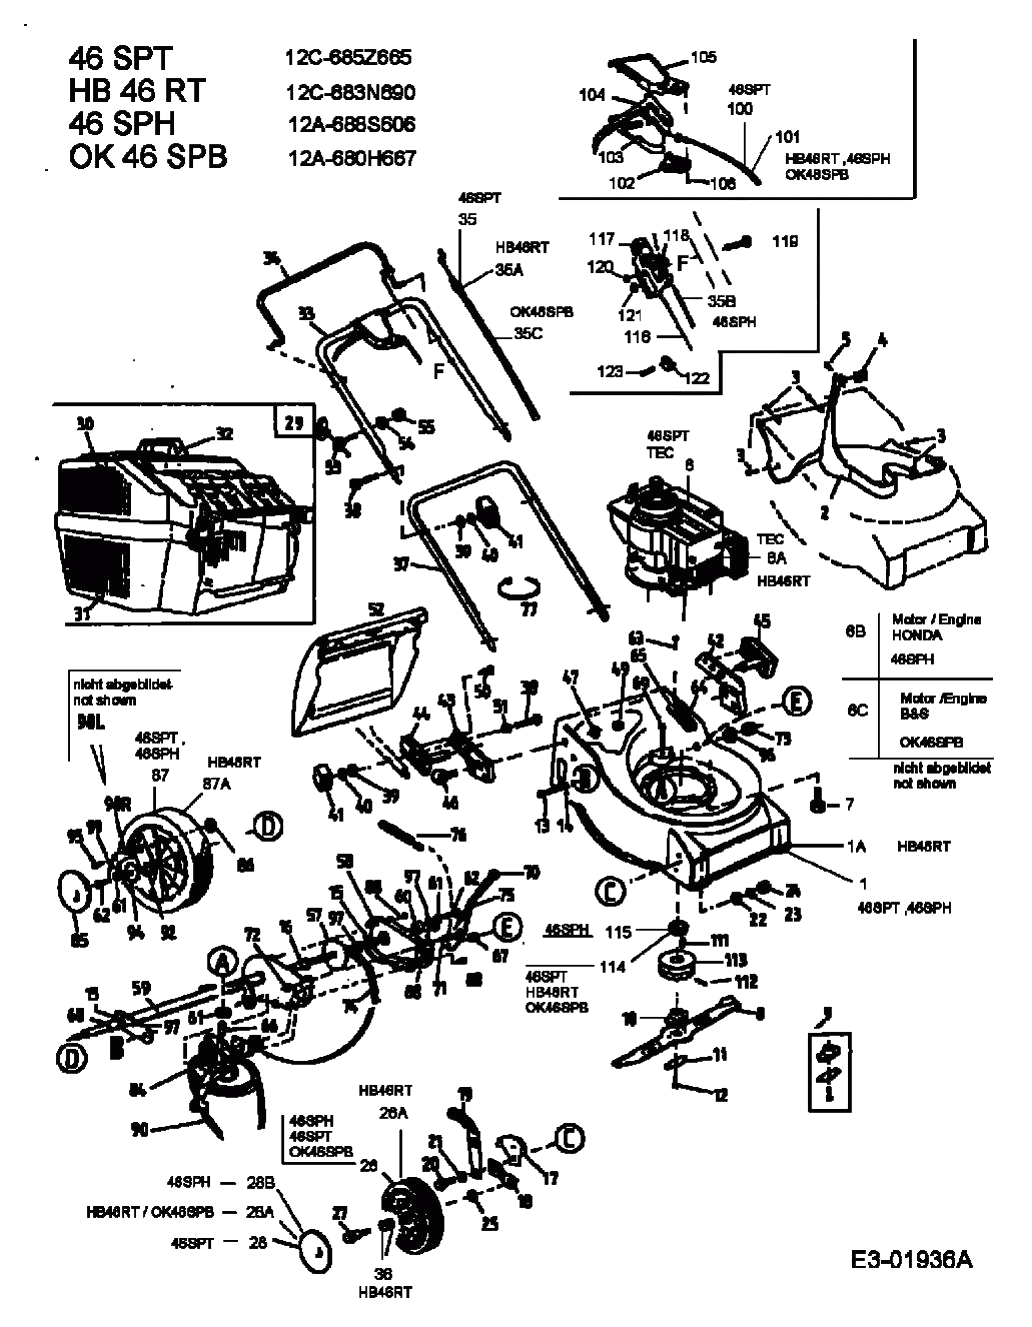 MTD Артикул 12C-685Z665 (год выпуска 2004). Основная деталировка